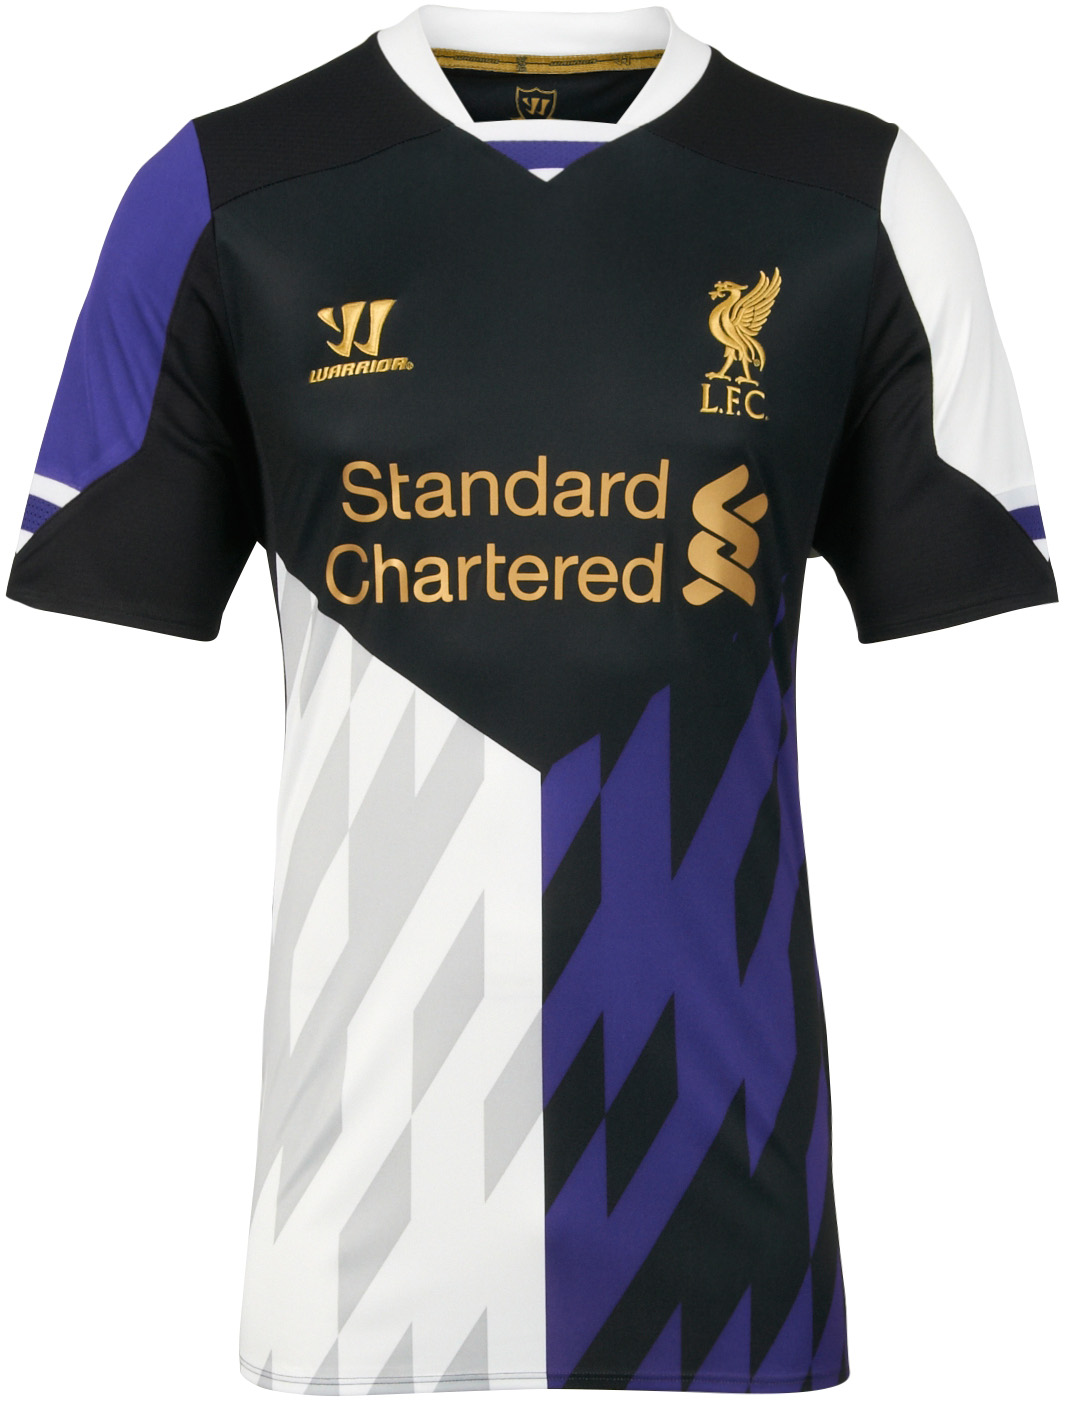 Image result for liverpool new balance purple shirt